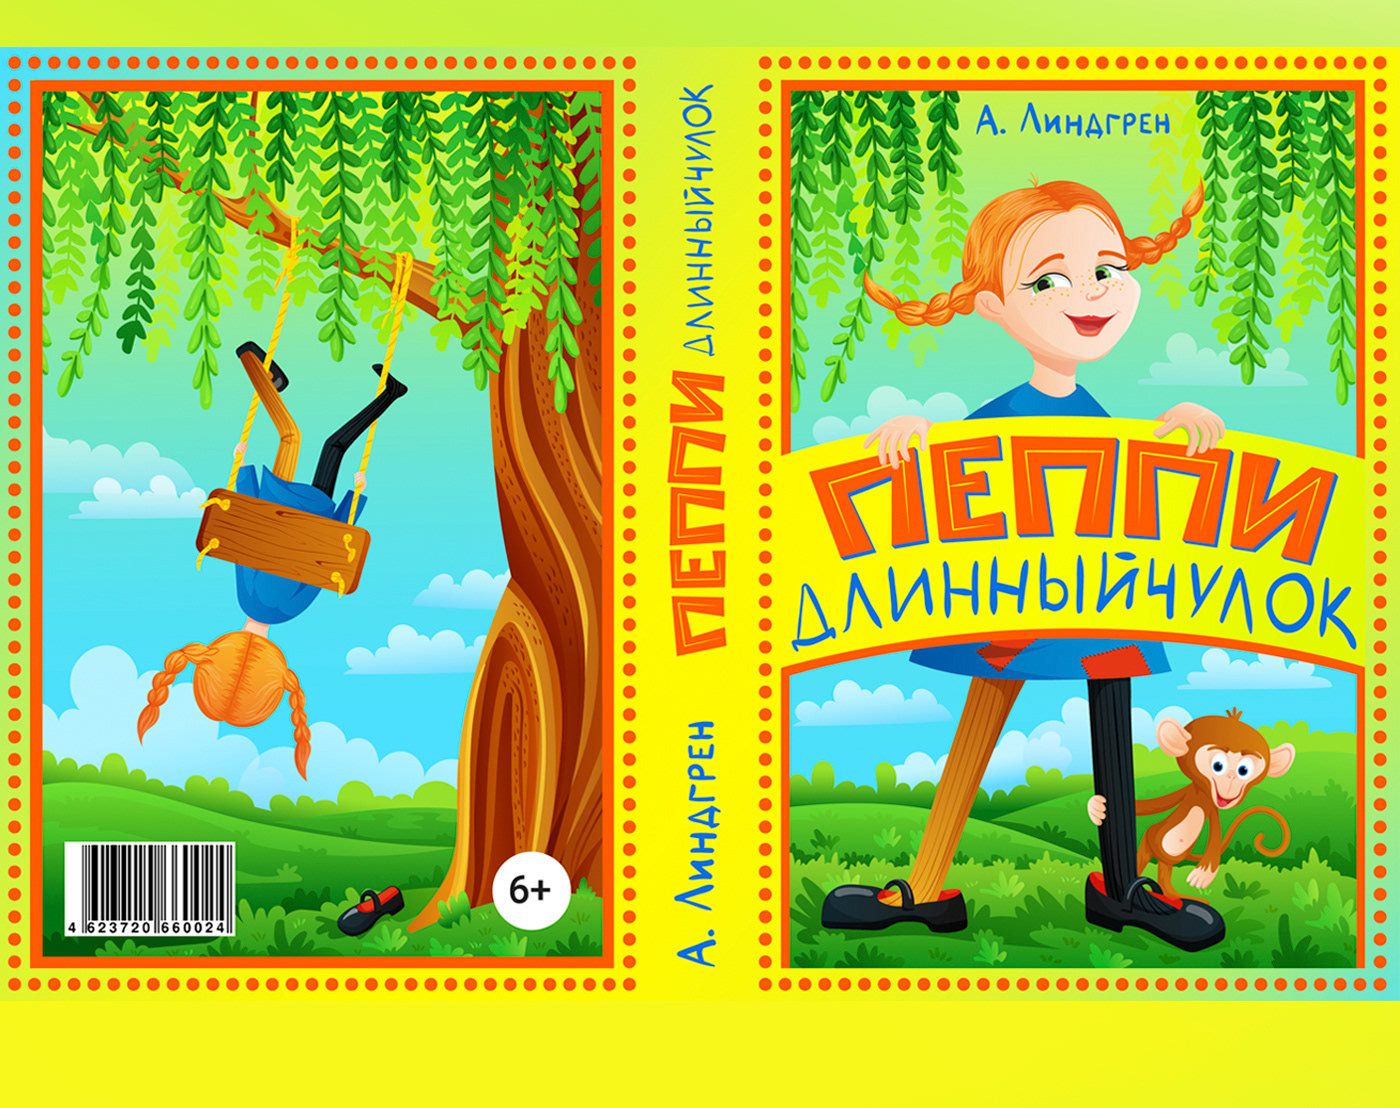 book cover book illustration kids illustration children's book lettering Book Cover Design book cover illustration Cover Art children illustration Vector Illustration